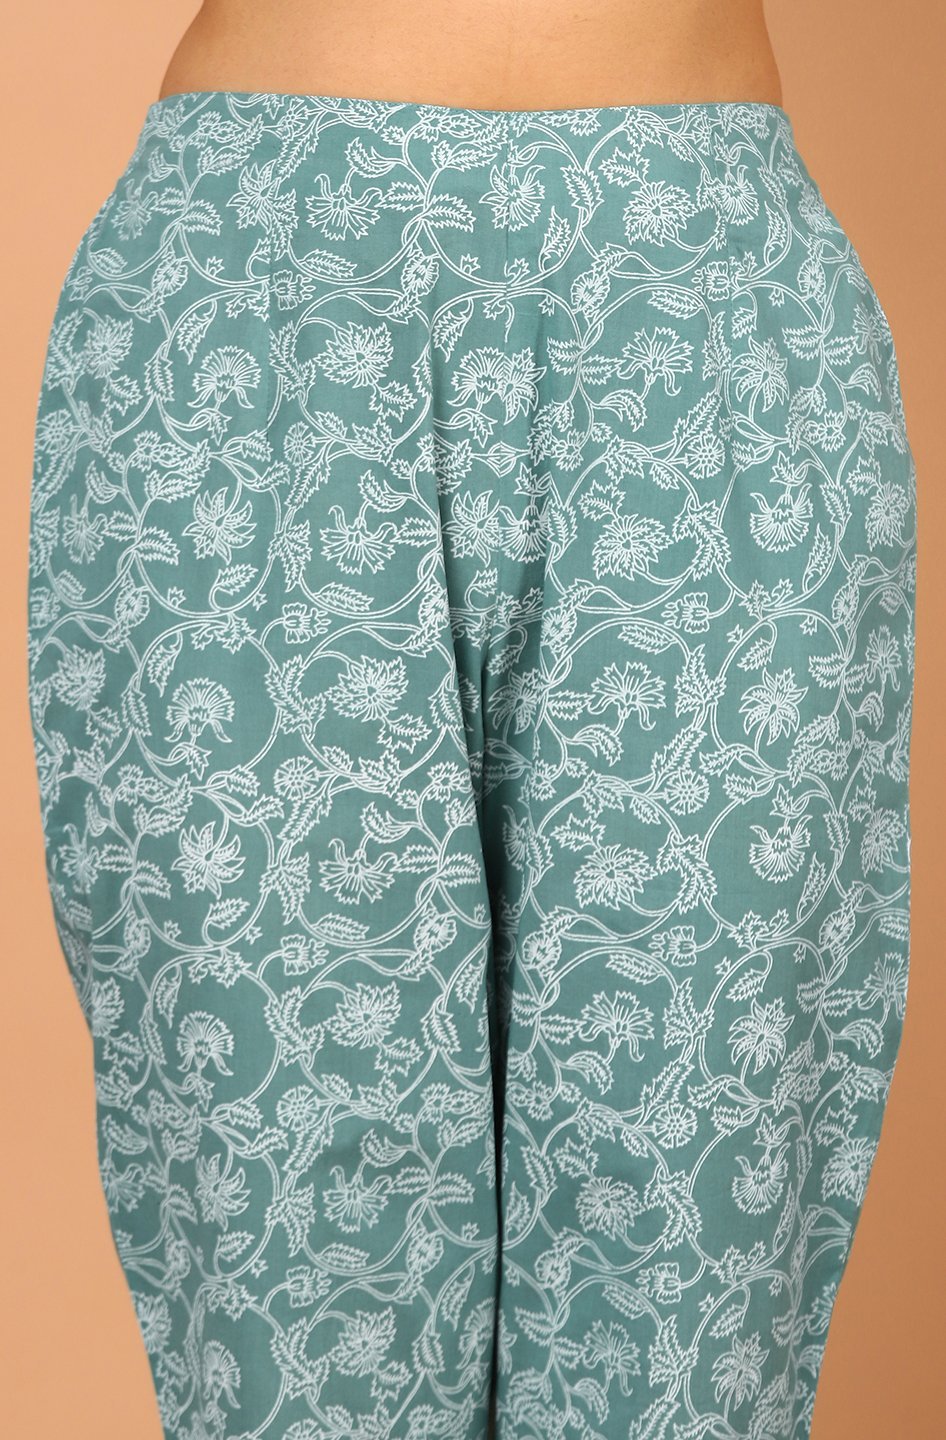 Women's Turquoise Cotton Kurta With Pant And Dupatta-Janasya